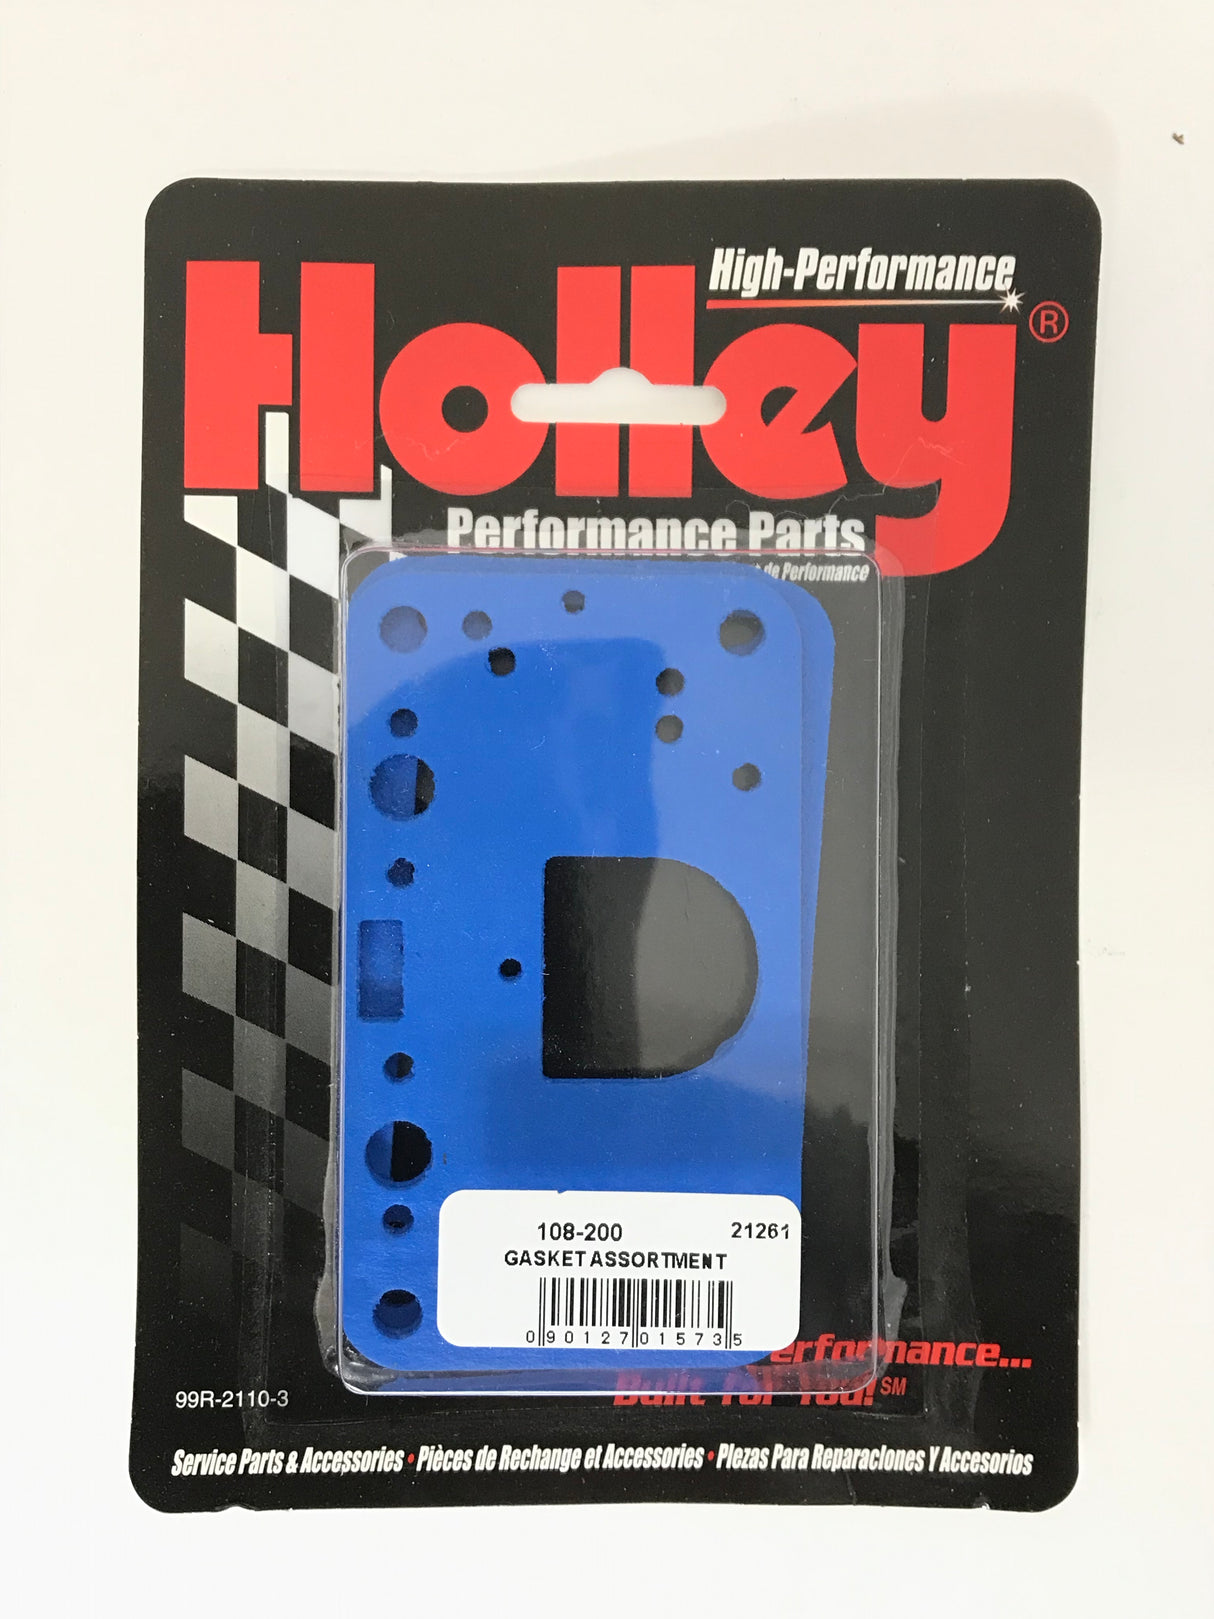 Holley 108-200 Gasket for Metering Block and Fuel Bowl Gasket Kits (4 pieces) - Carburetor - Reusable